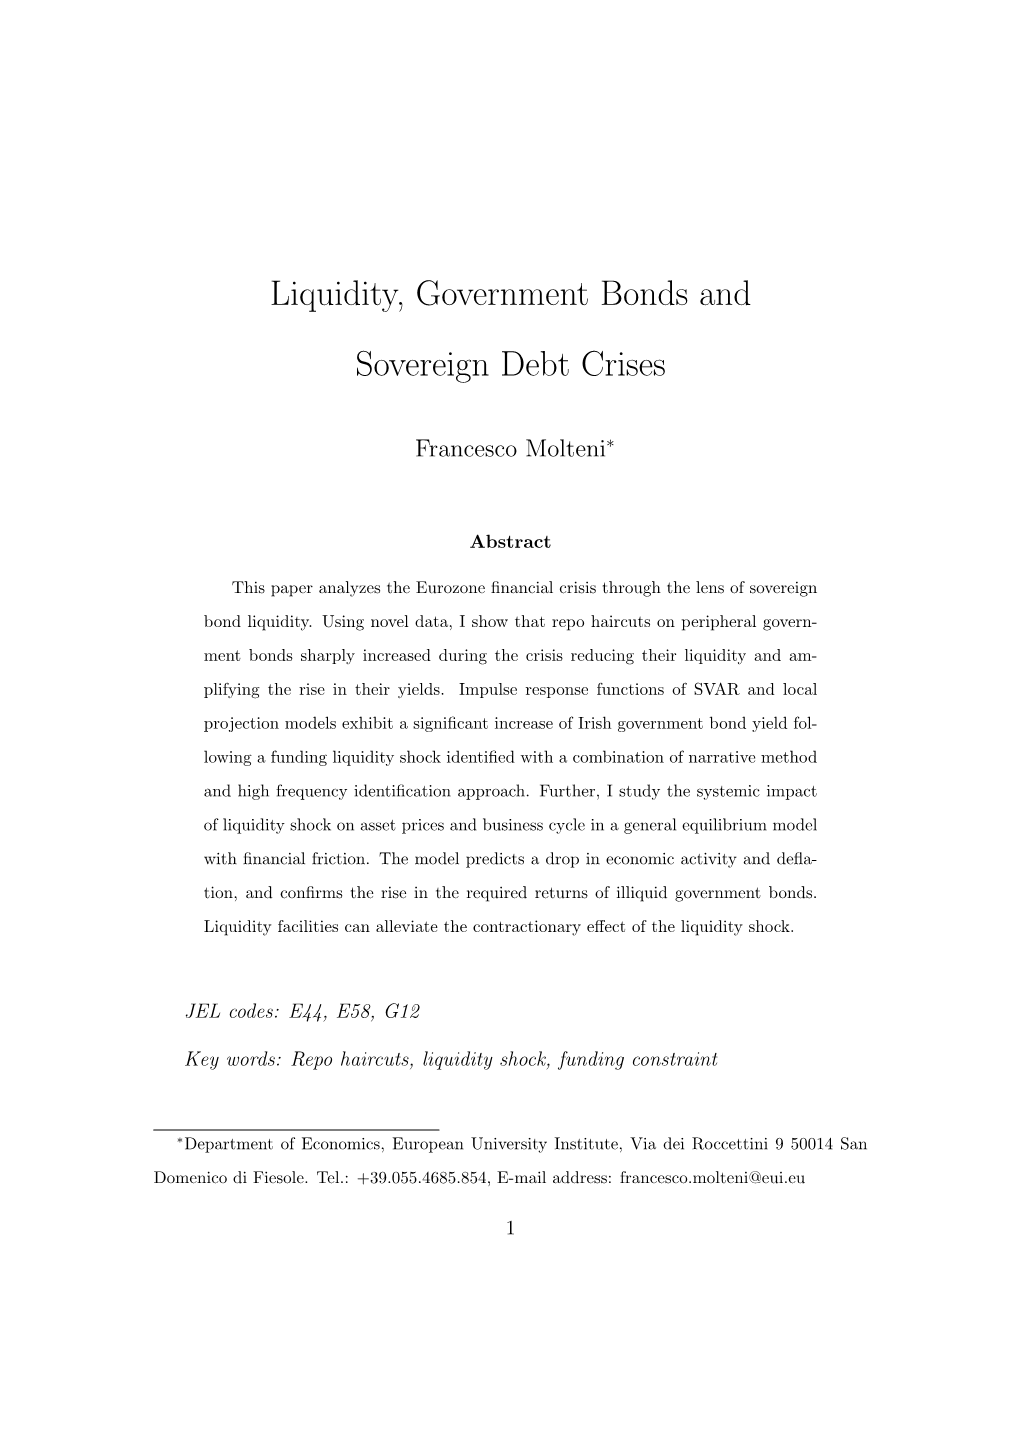 Liquidity, Government Bonds and Sovereign Debt Crises